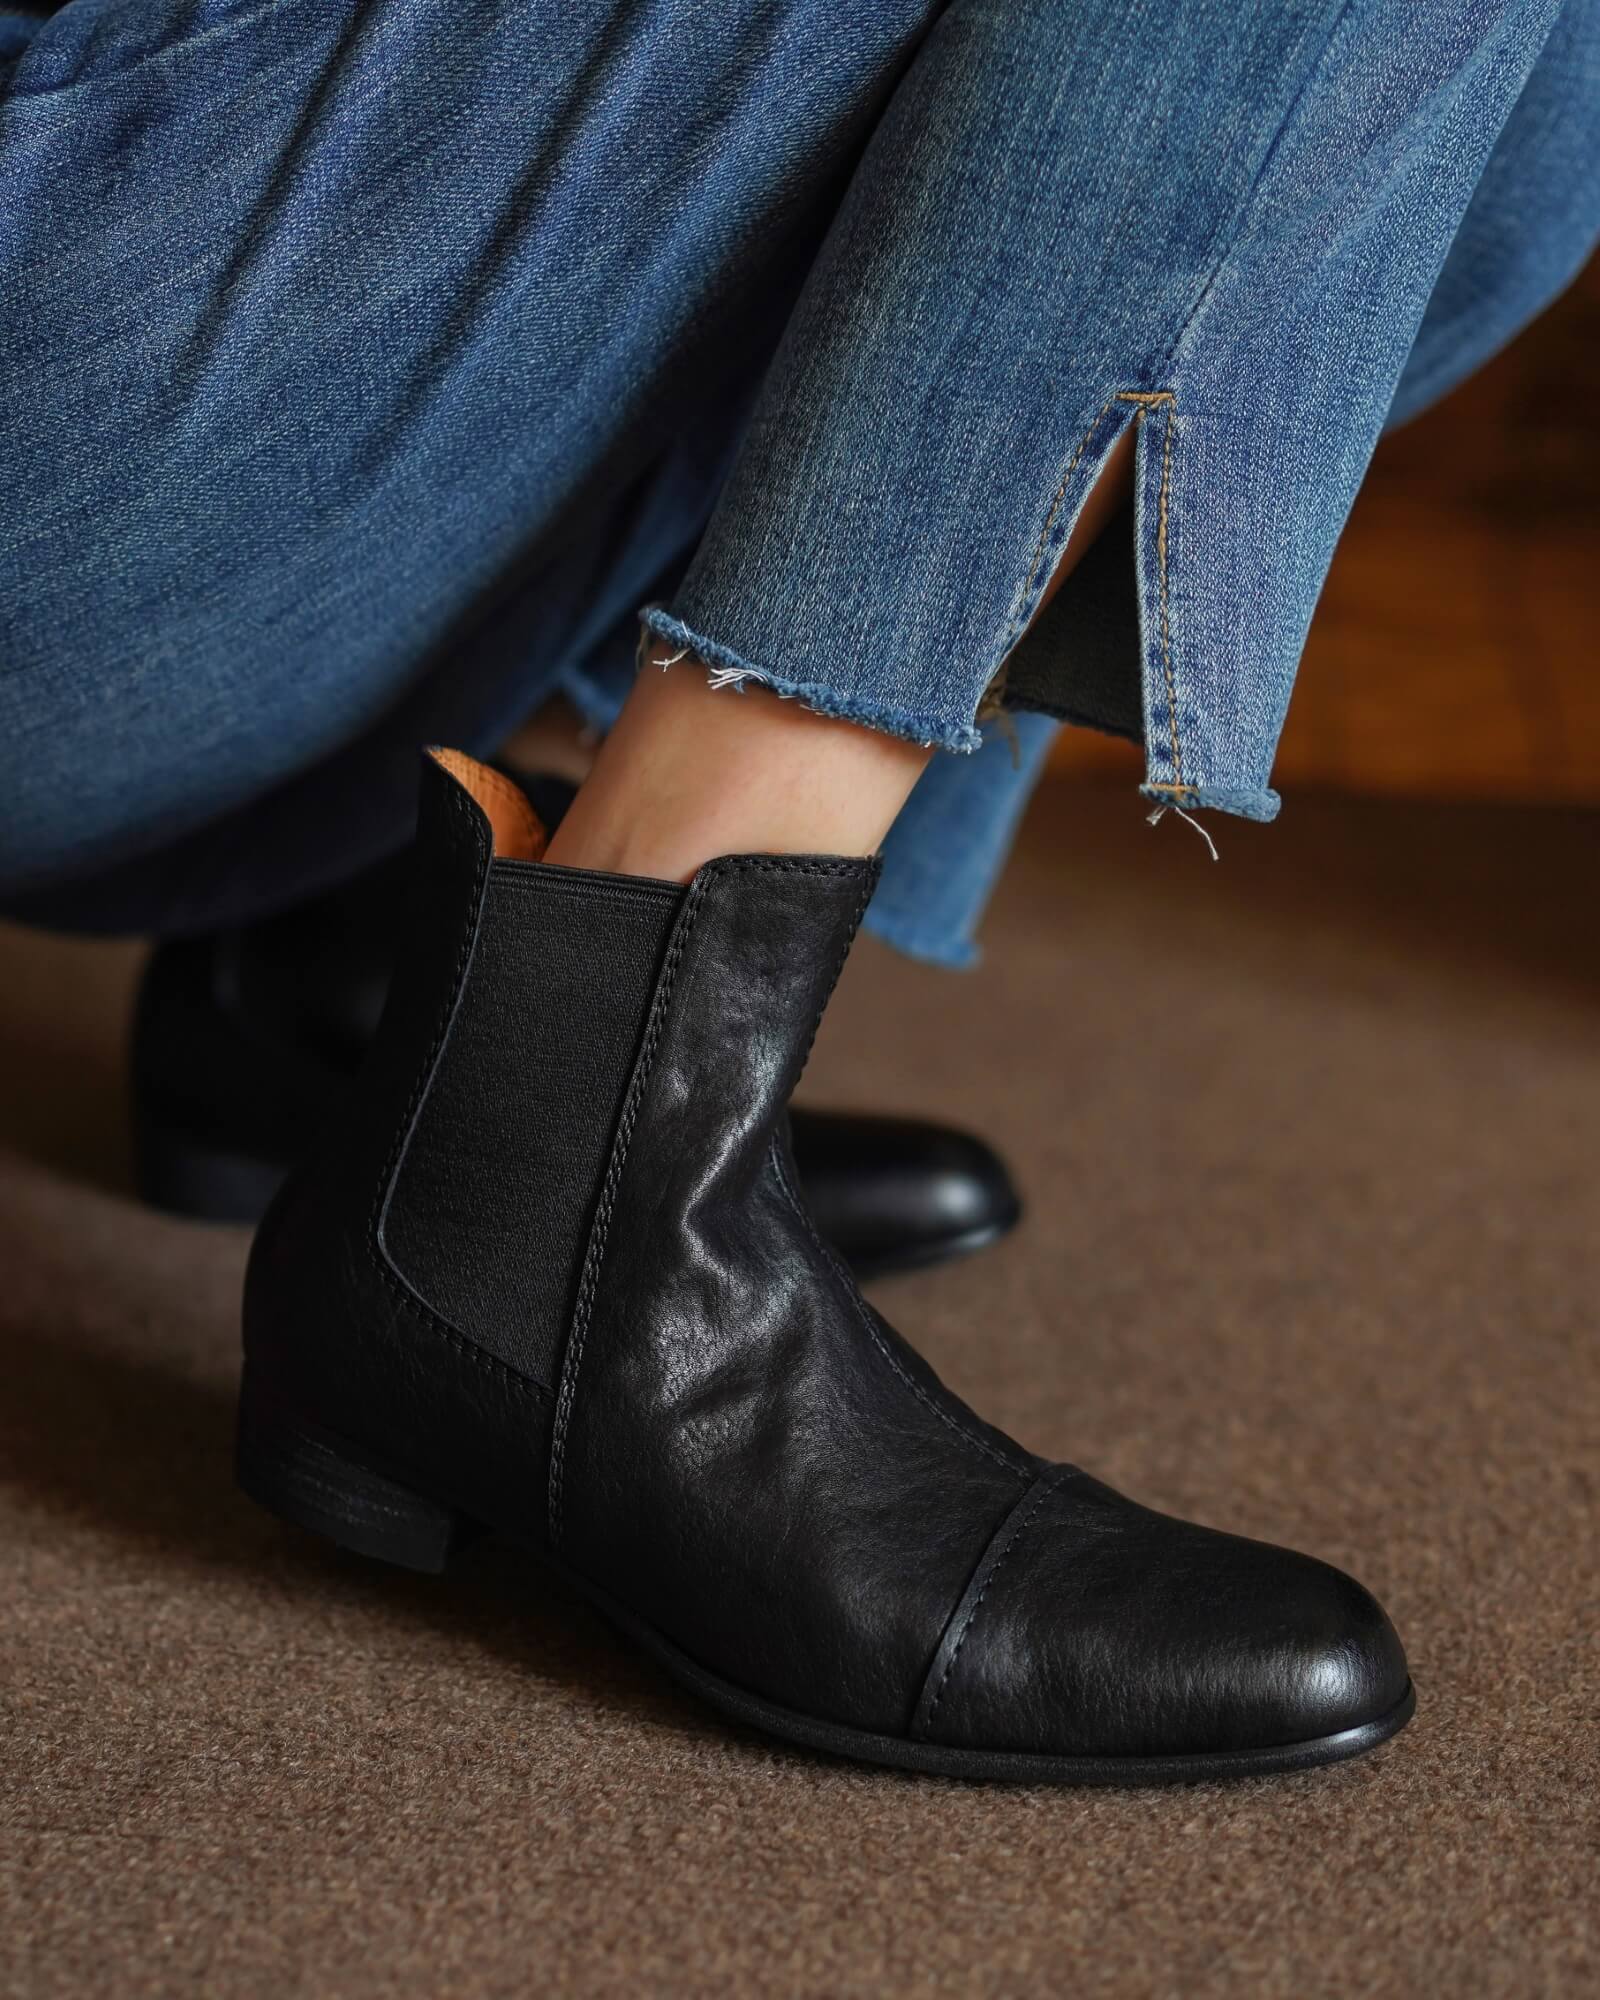 370-cap-toe-black-leather-boots-model-1